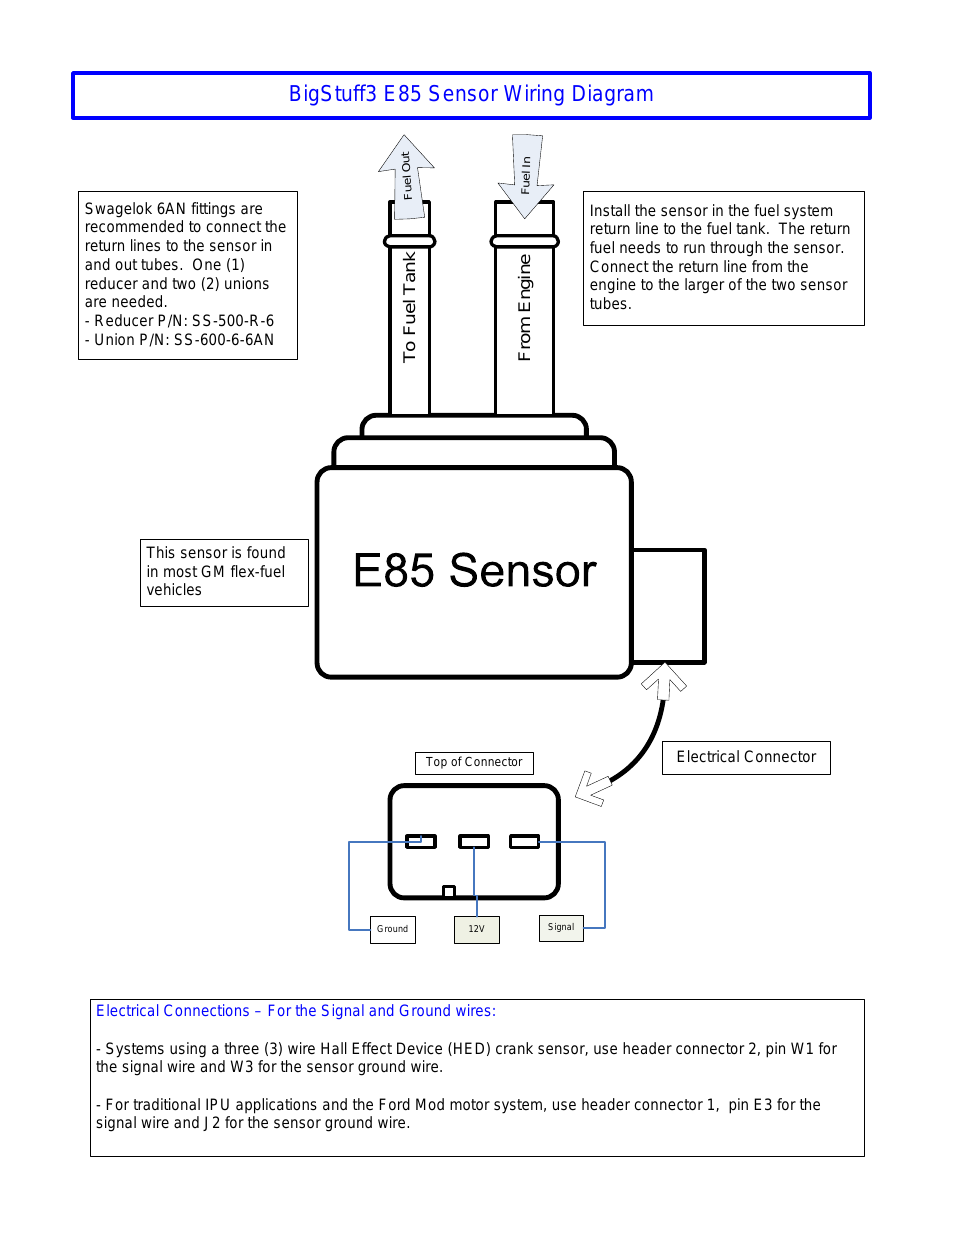 BigStuff3 E85 Sensor Wiring Diagram